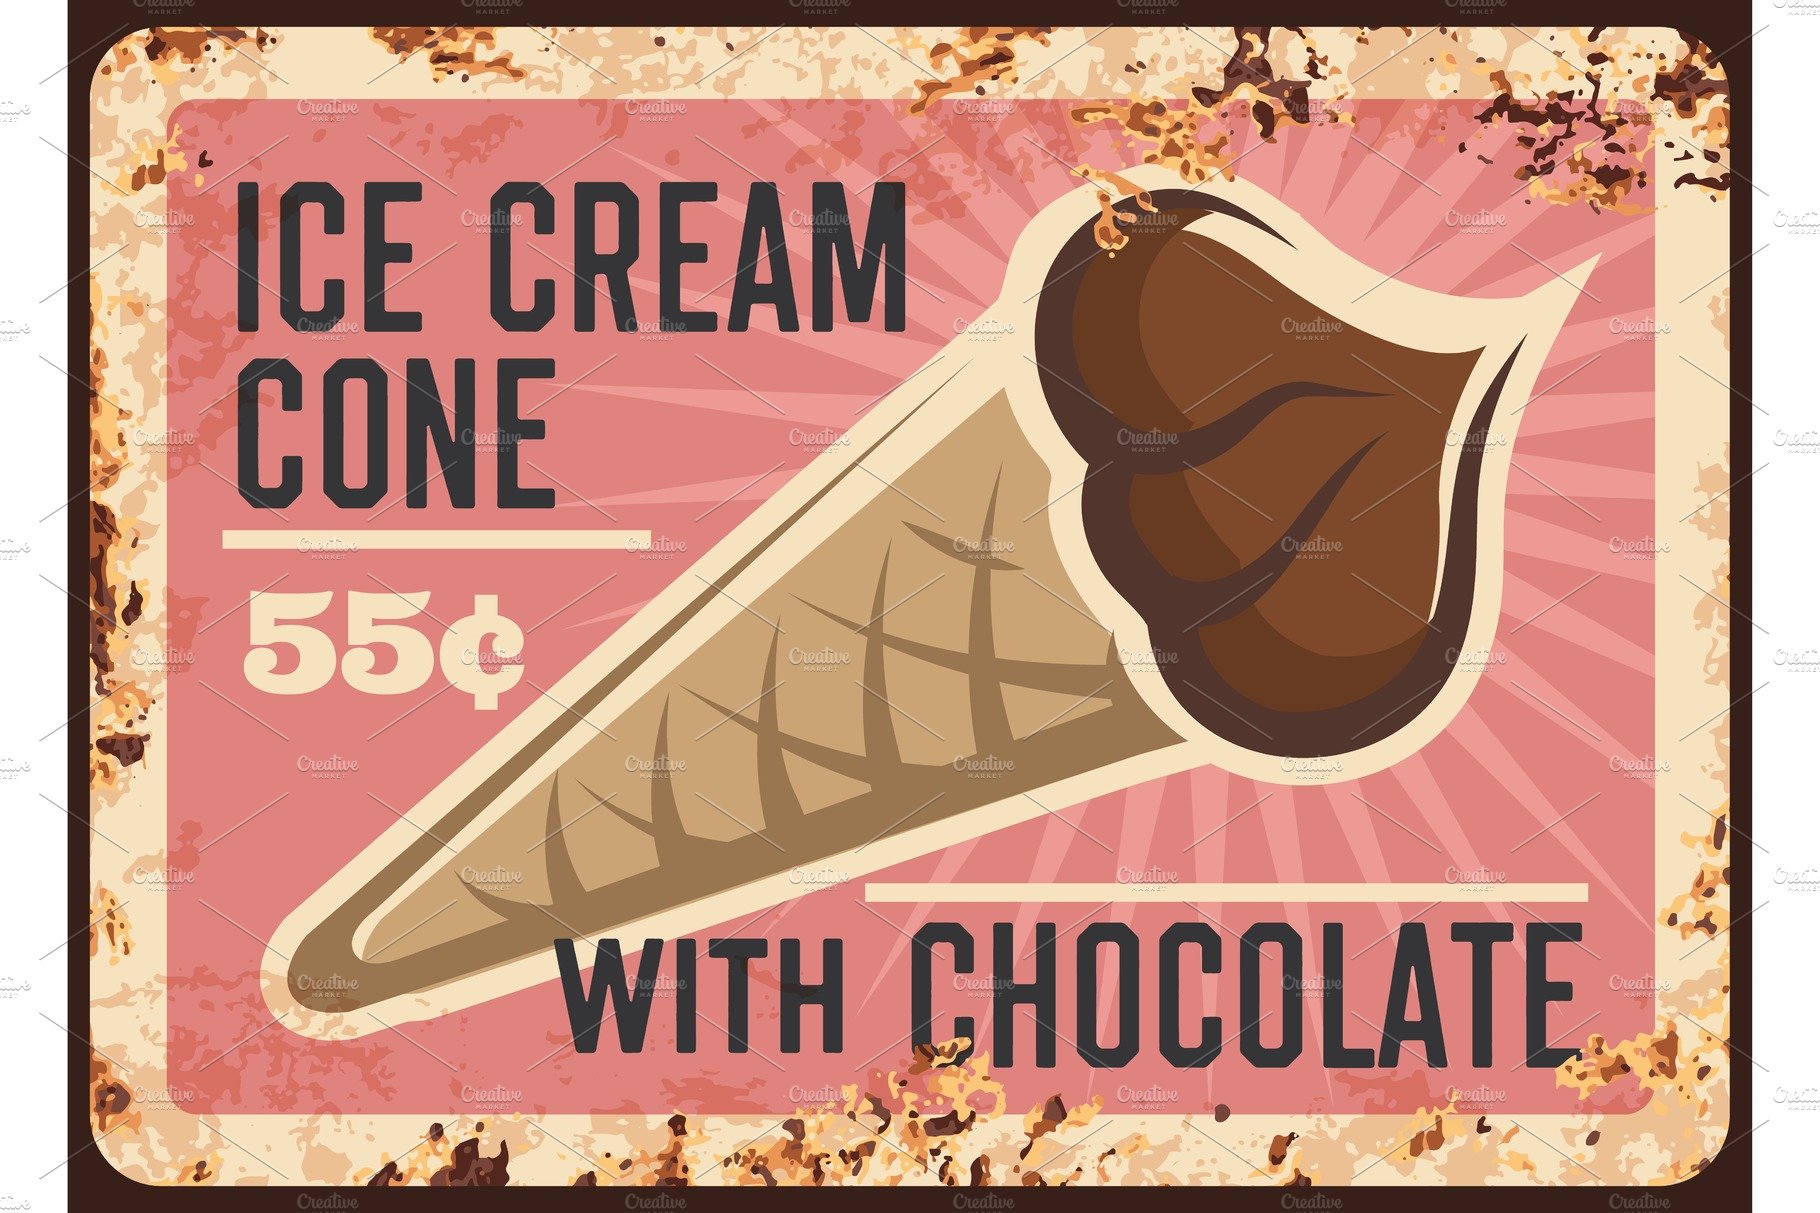 Chocolate ice cream waffle cone cover image.